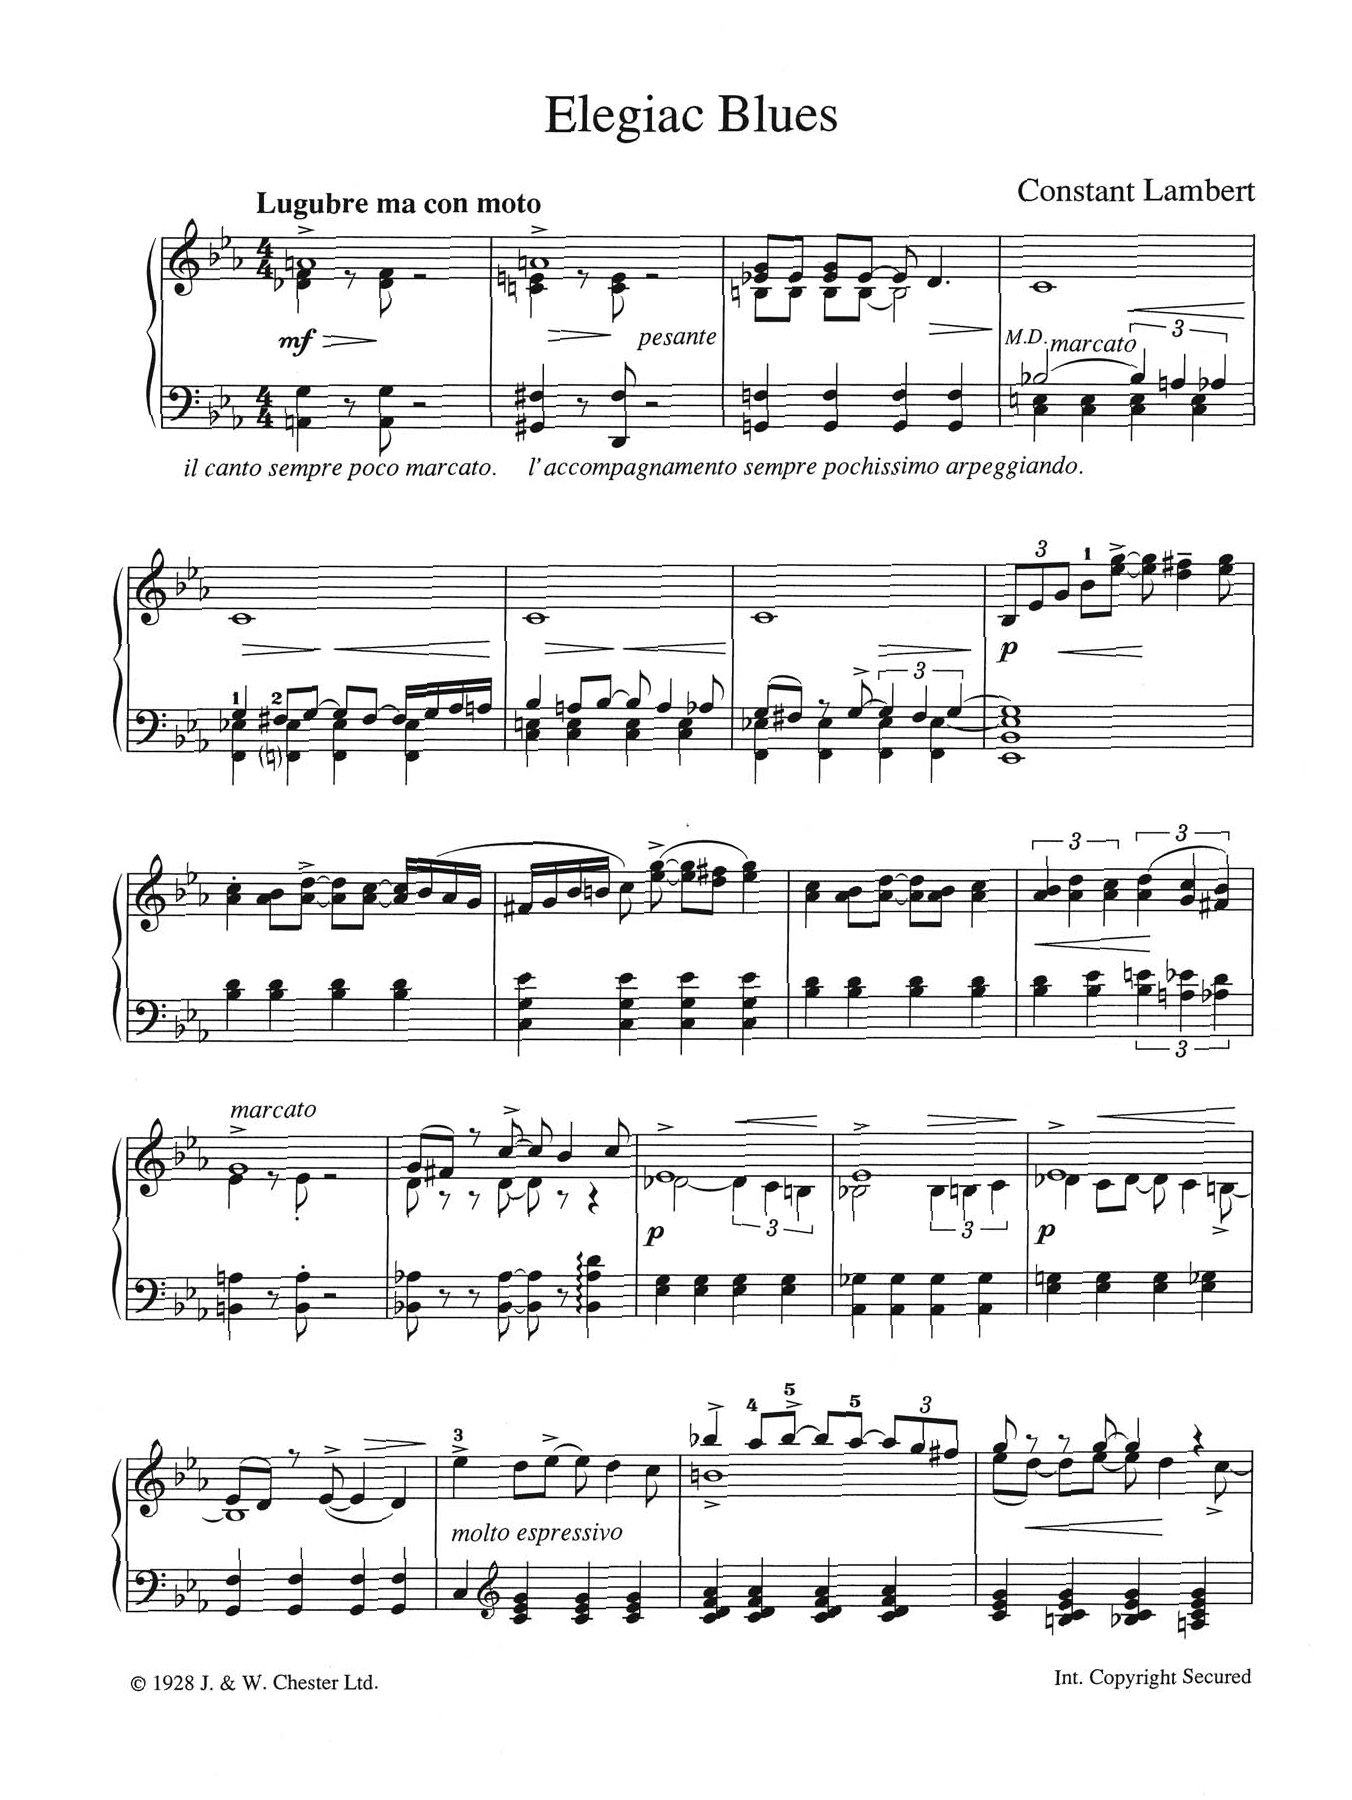 Constant Lambert Elegiac Blues Sheet Music Notes & Chords for Piano - Download or Print PDF